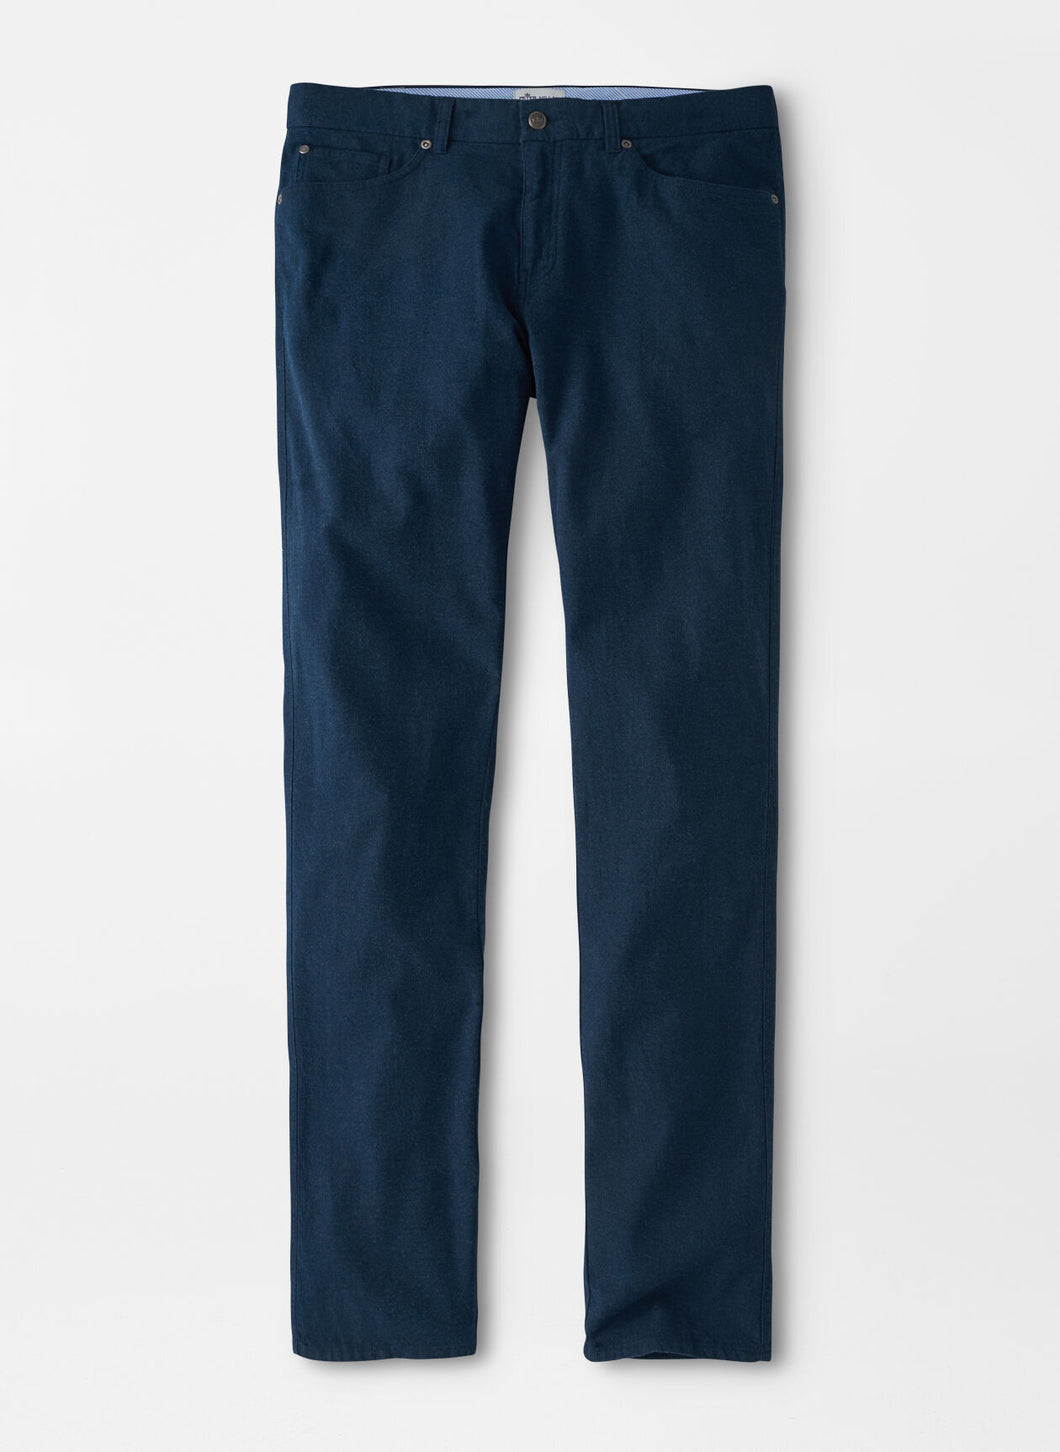 Peter Millar Flannel Five-Pocket Pant in Atlantic Blue